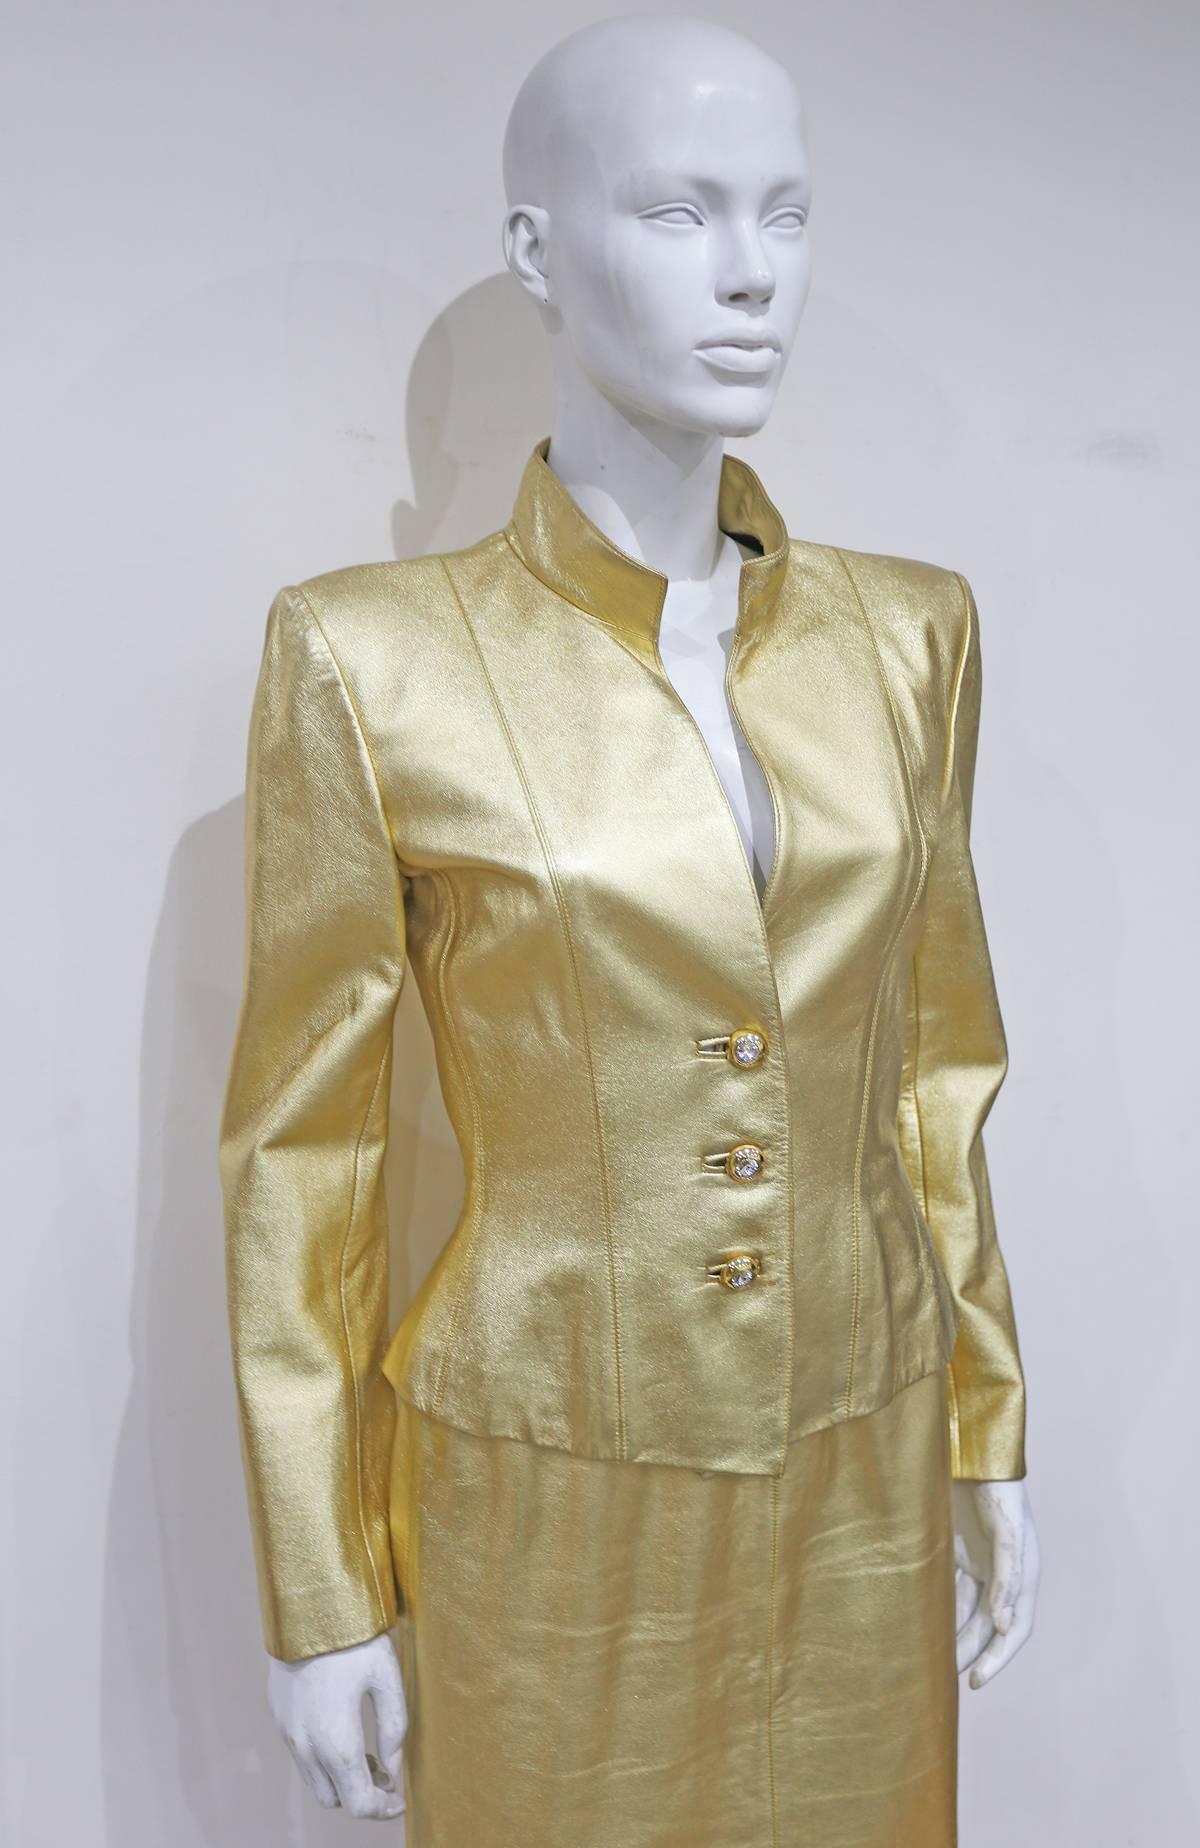 Incredible Yves Saint Laurent gold skirt suit, circa 1979.

Fr 38